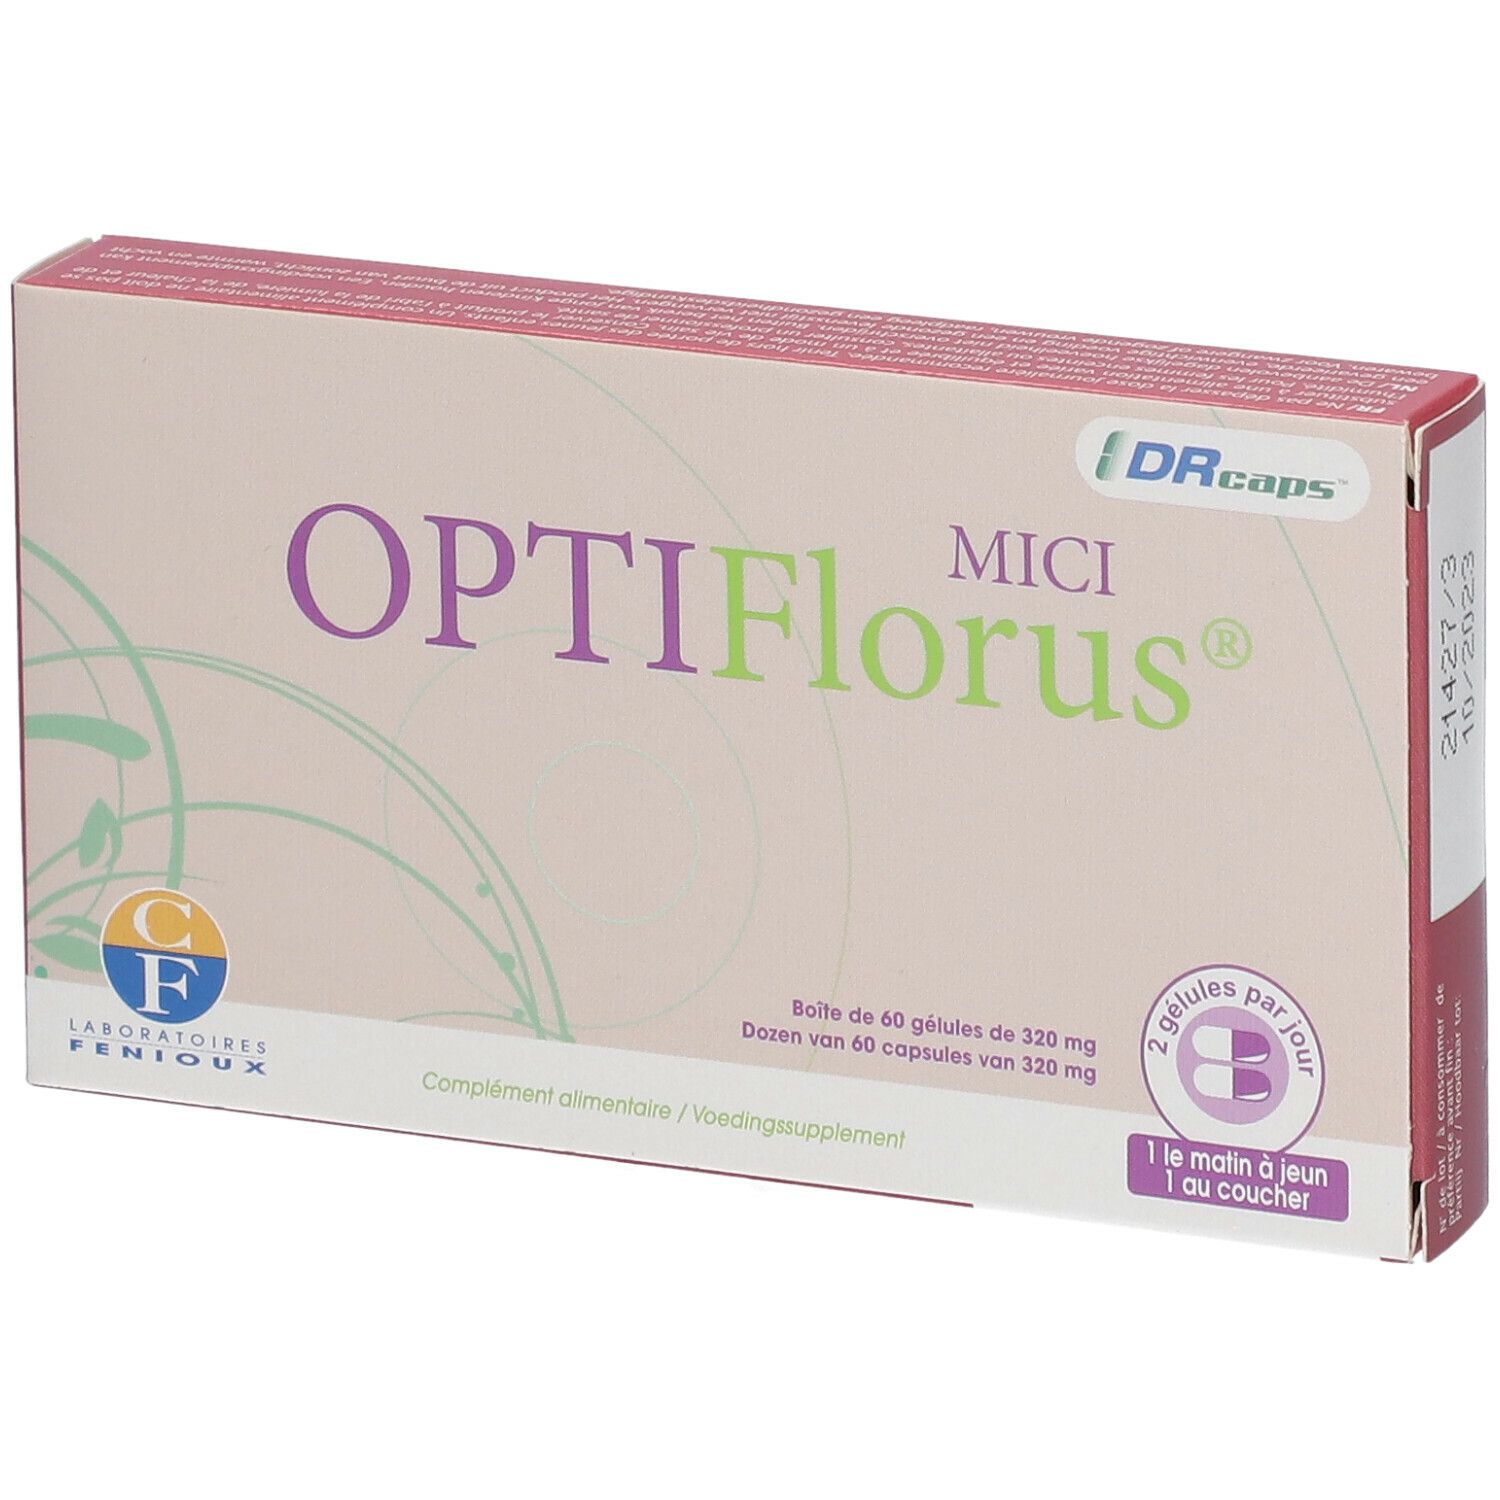 OPTIflorus Mici